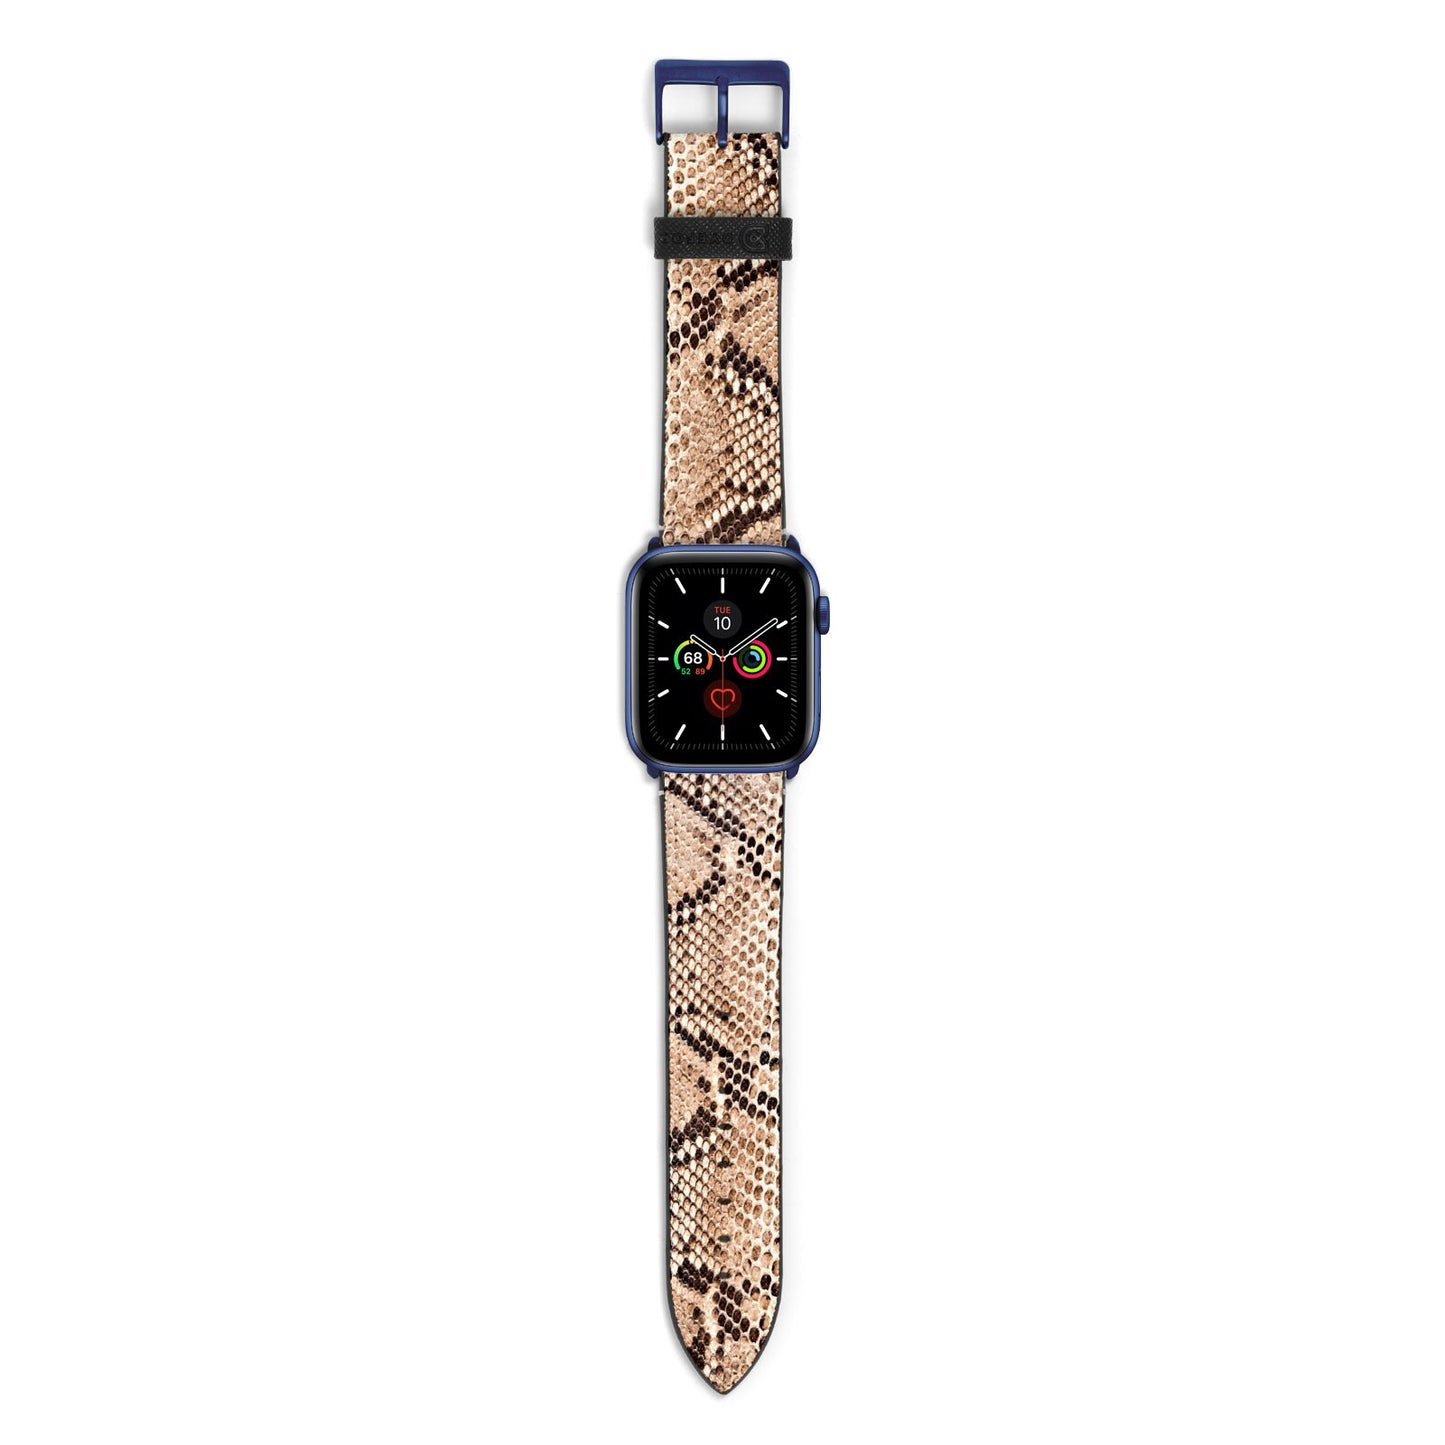 Snakeskin Apple Watch Strap with Blue Hardware